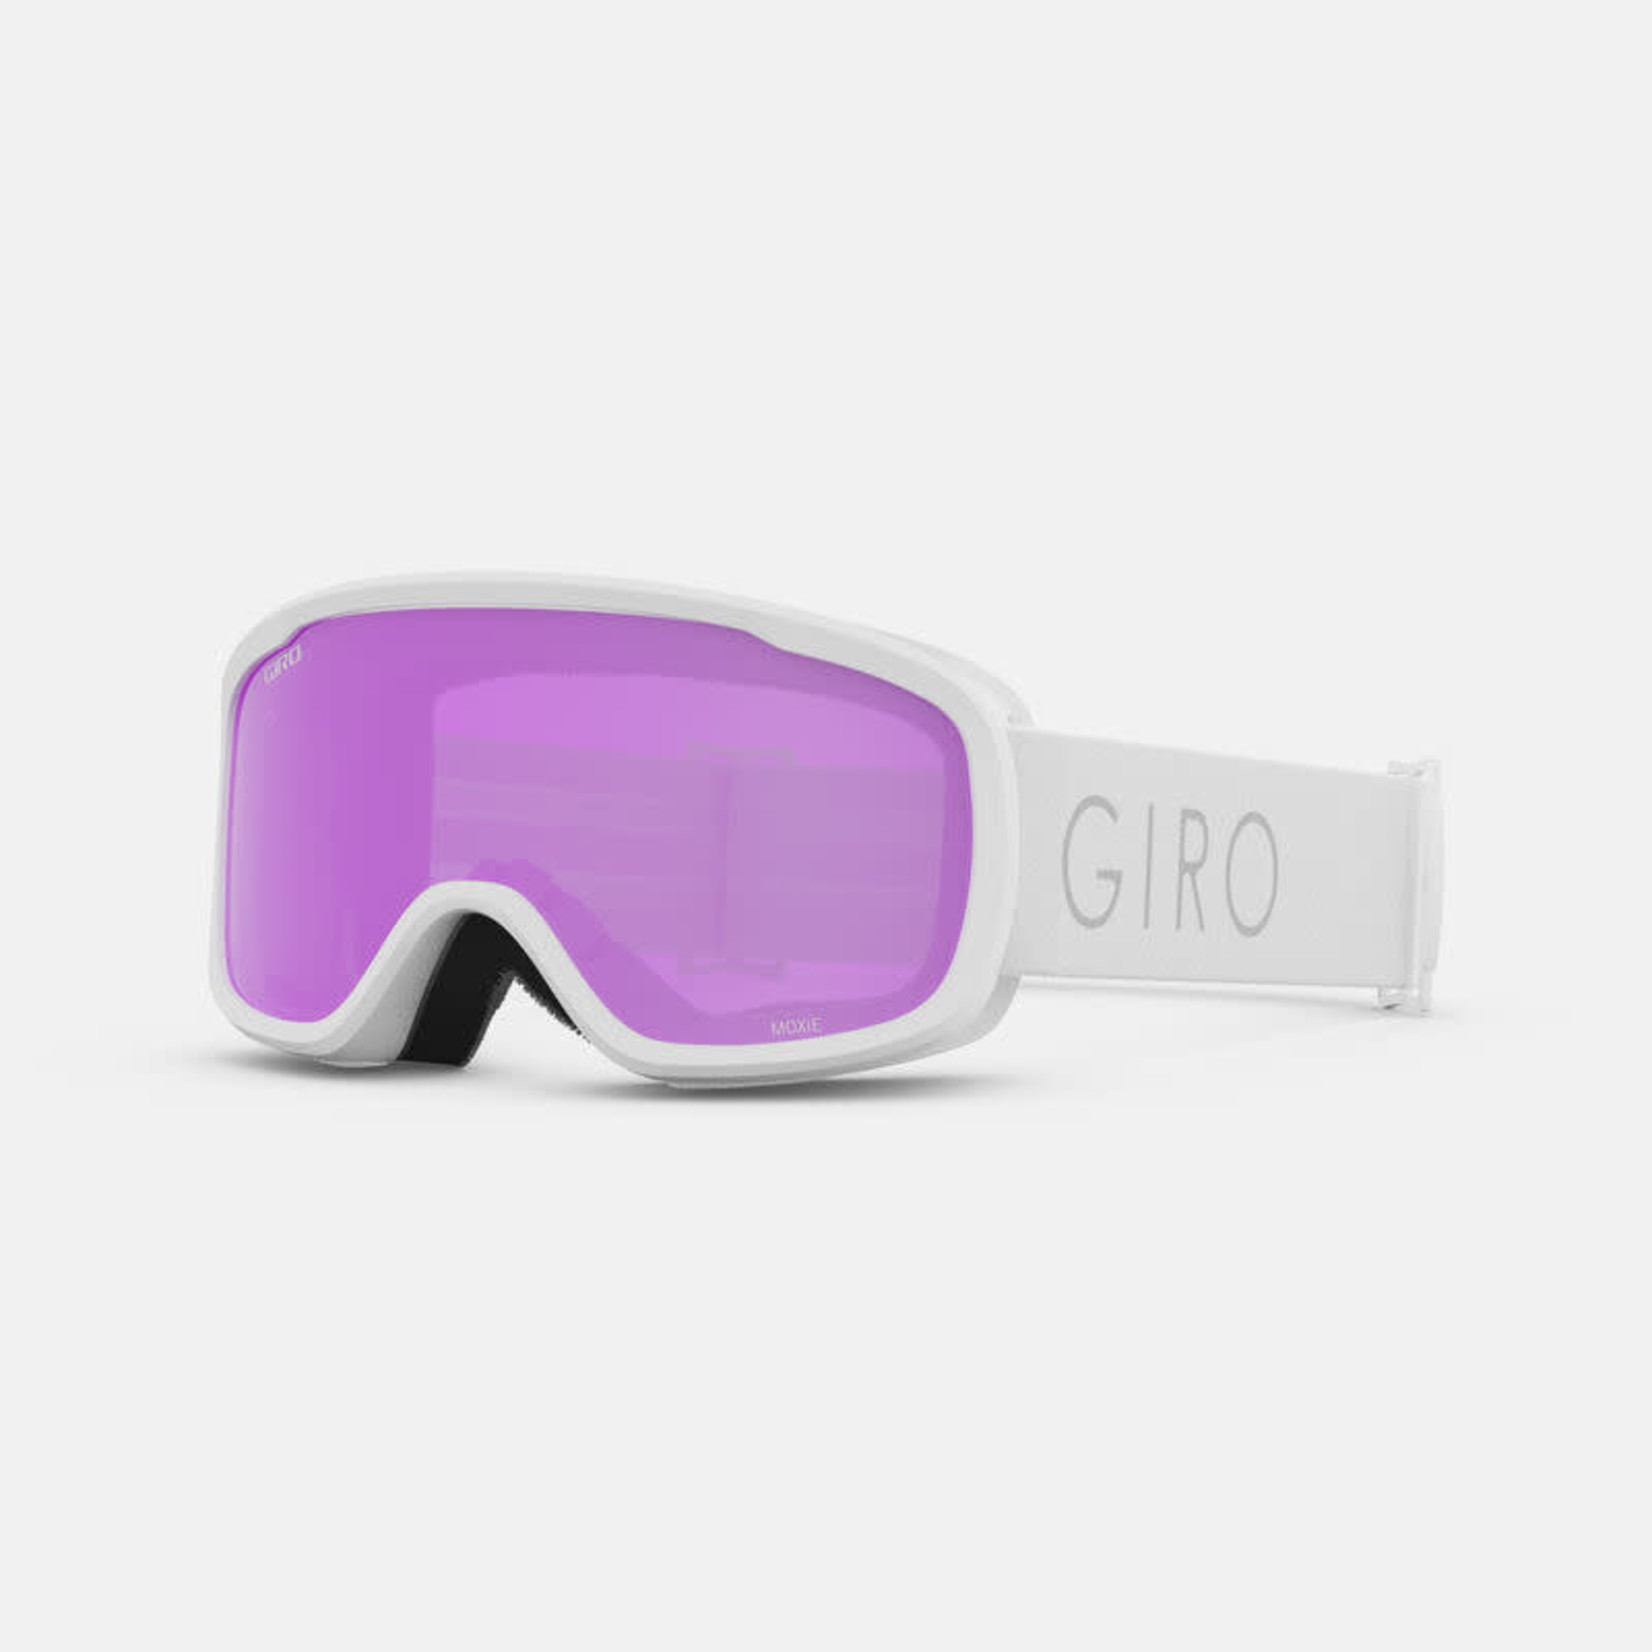 Giro GIRO Ella lunette de ski pour femme